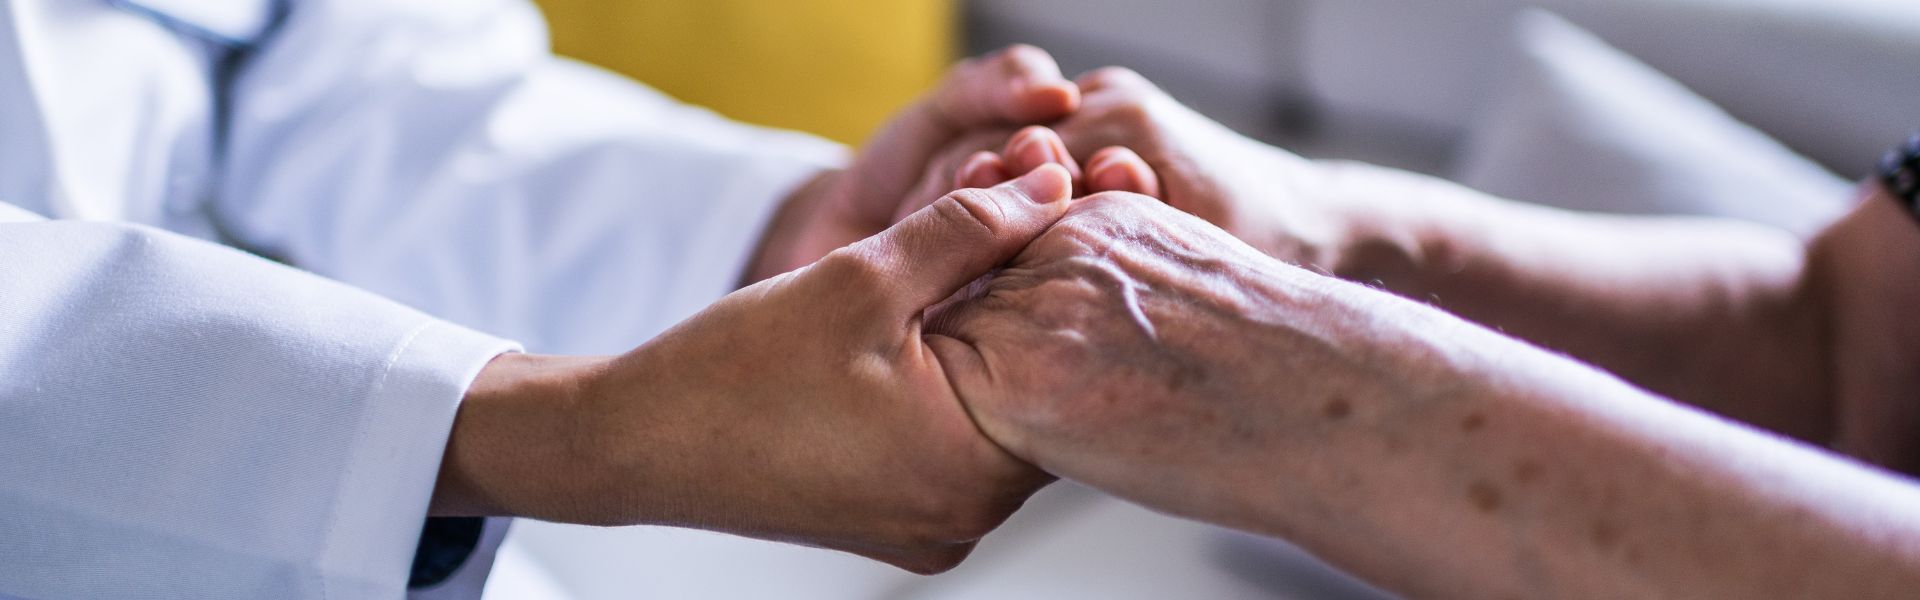 home healthcare insurance - caregiver holding seniors hands